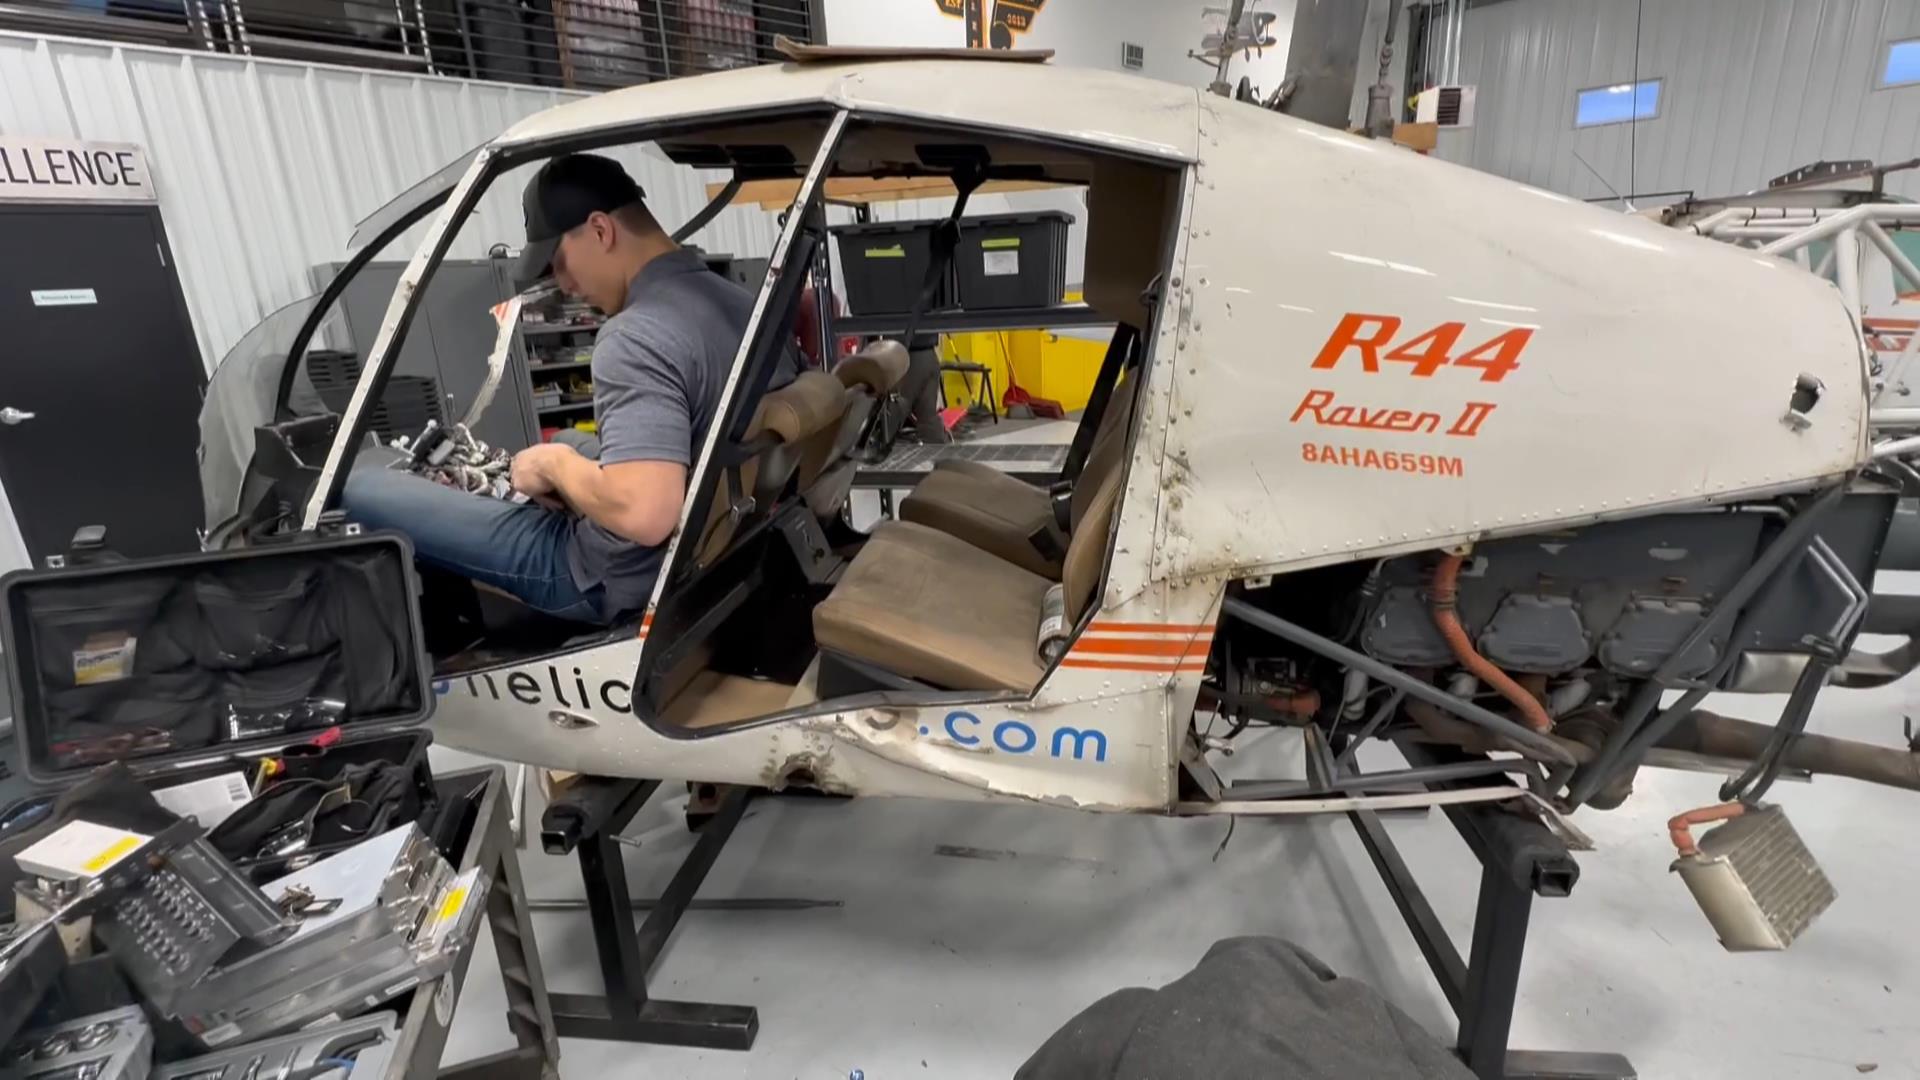 Robinson R44 in the aircraft salvage hangar at BAS being disassembled